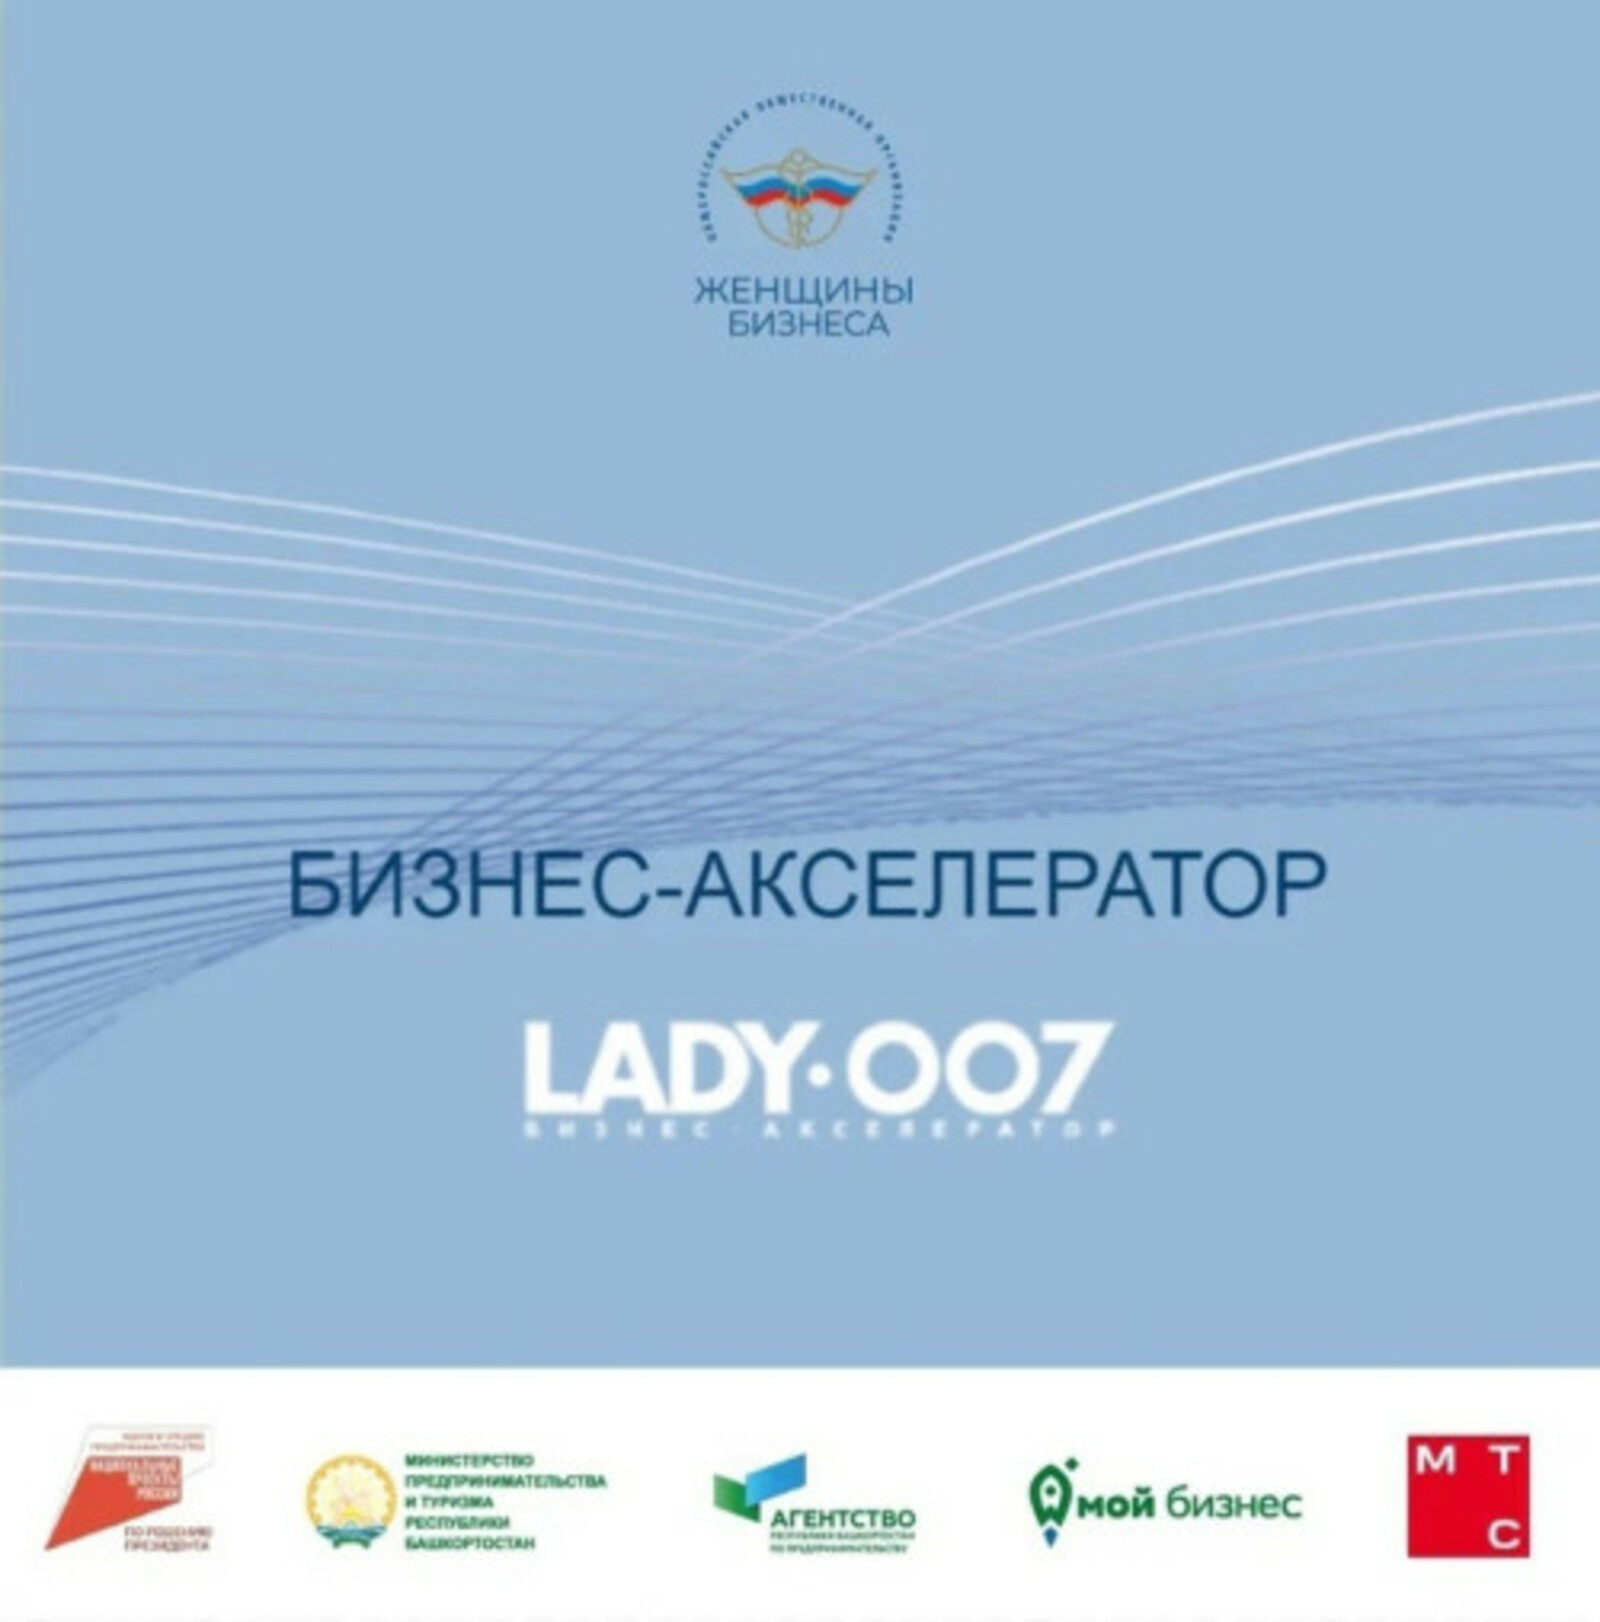 В Башкирии запустят бизнес-акселератор Lady007